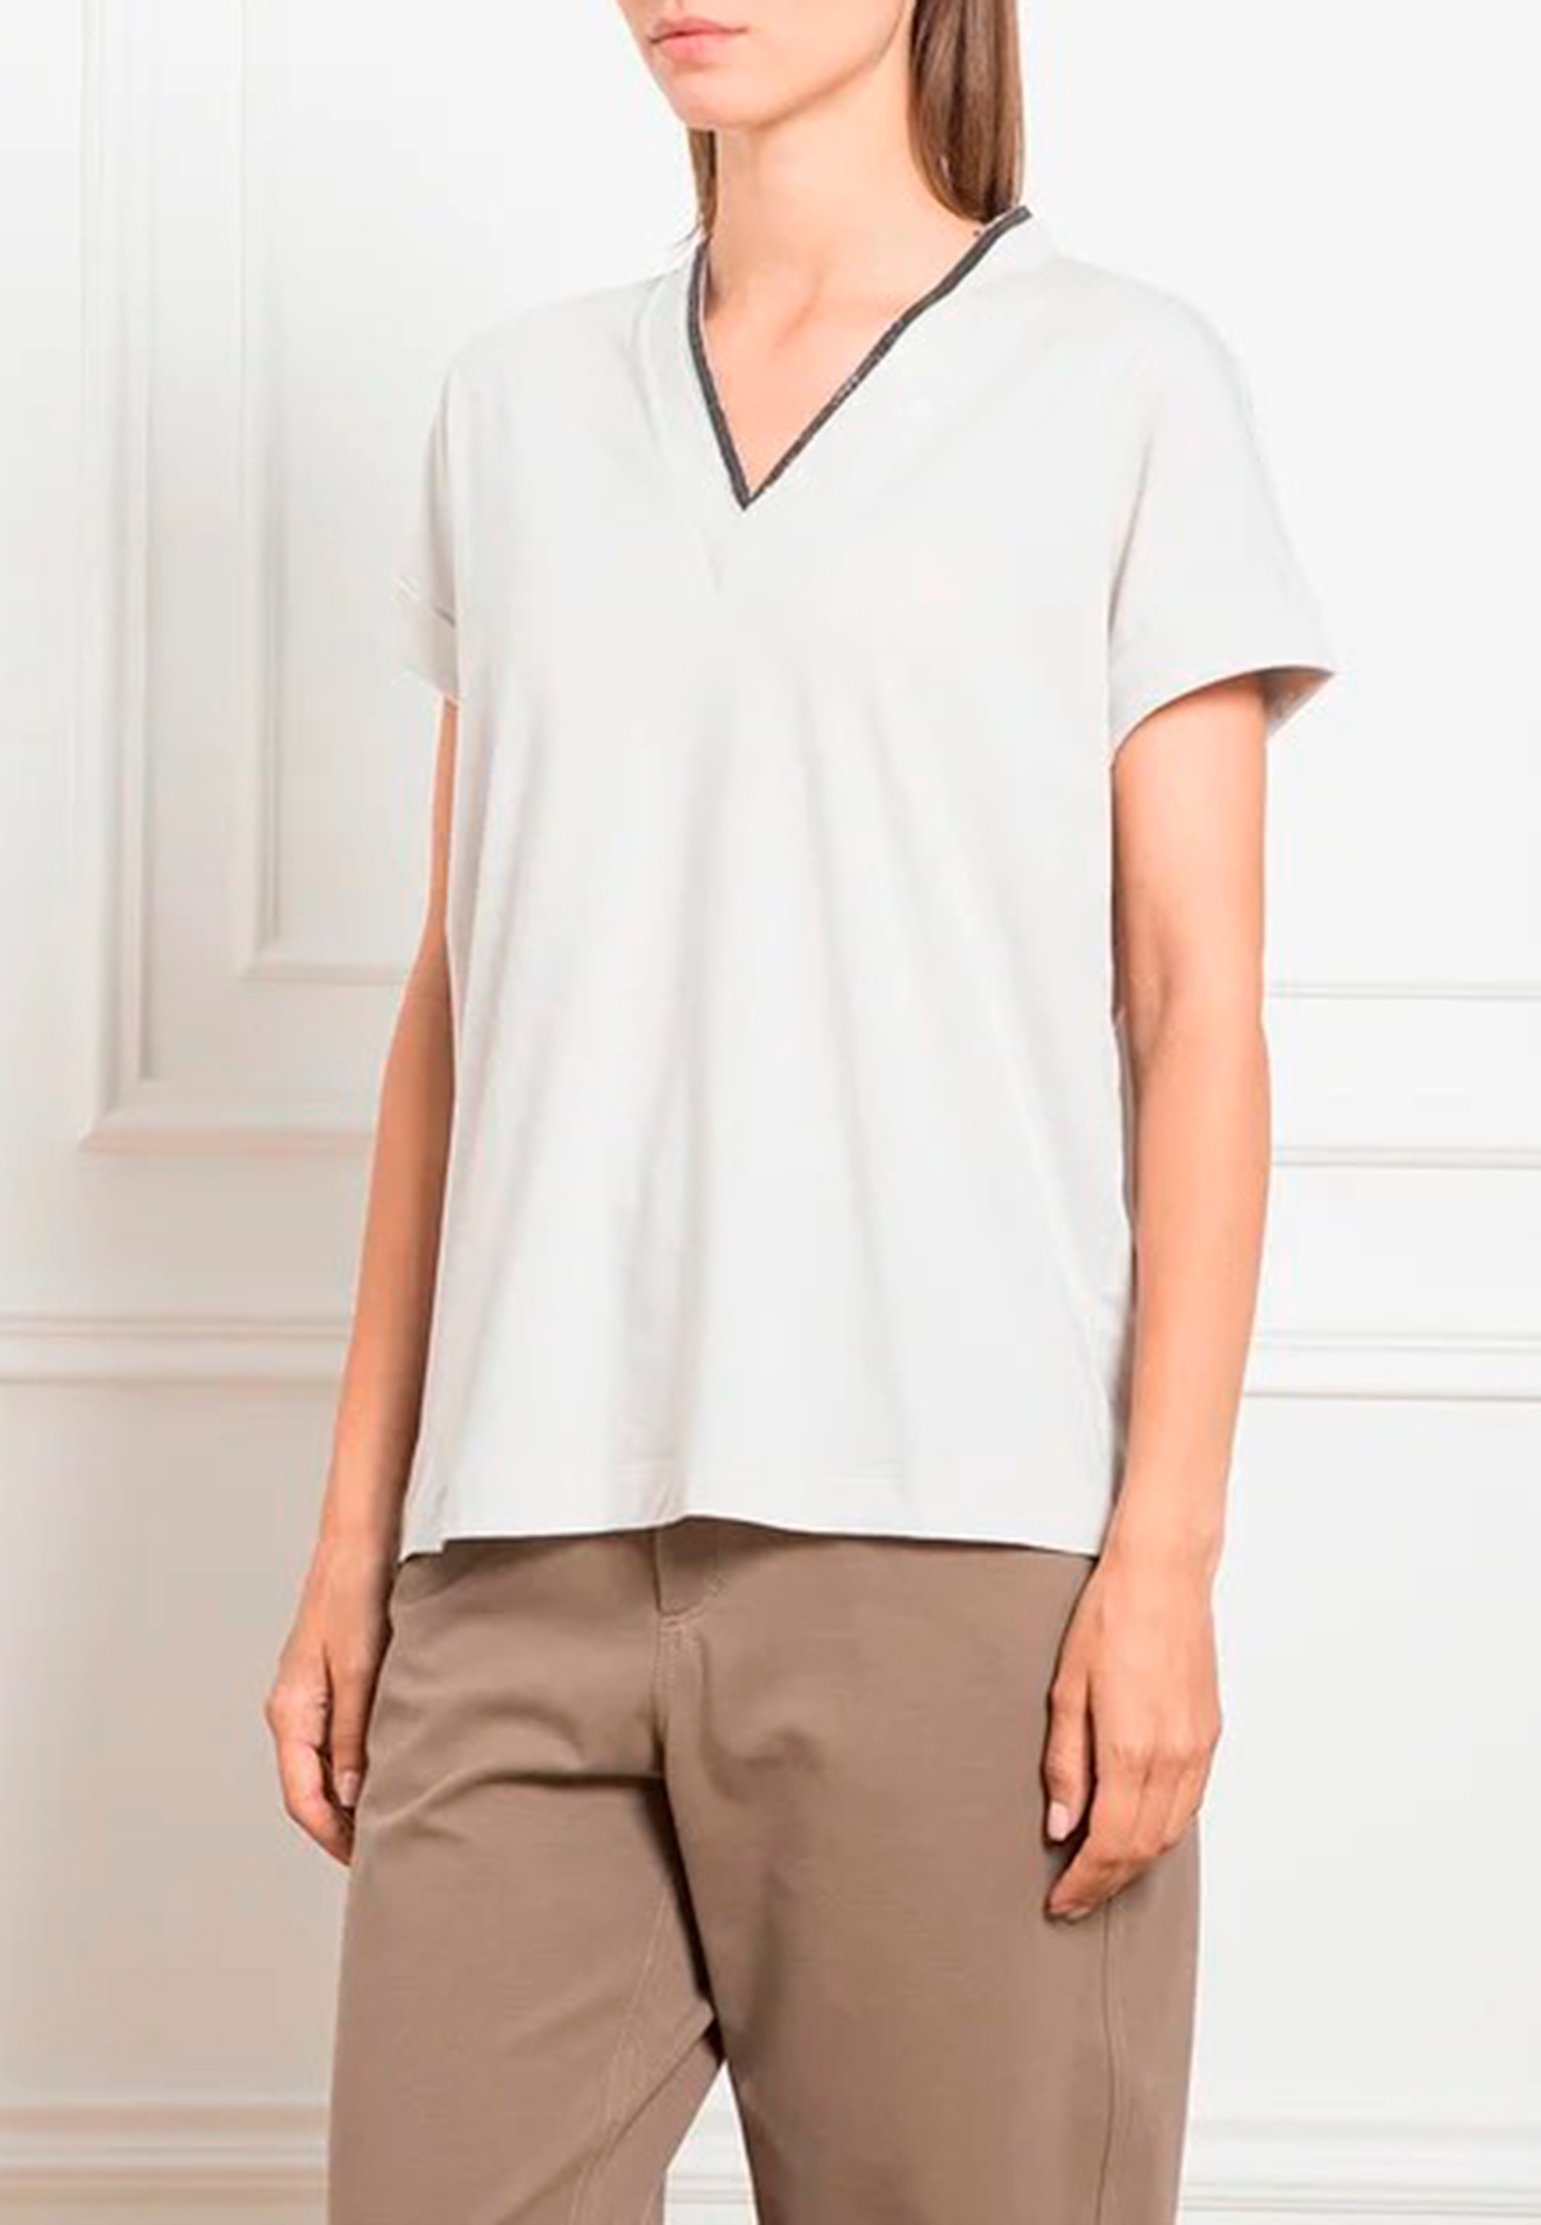 T-Shirt BRUNELLO CUCINELLI Color: white (Code: 270) in online store Allure